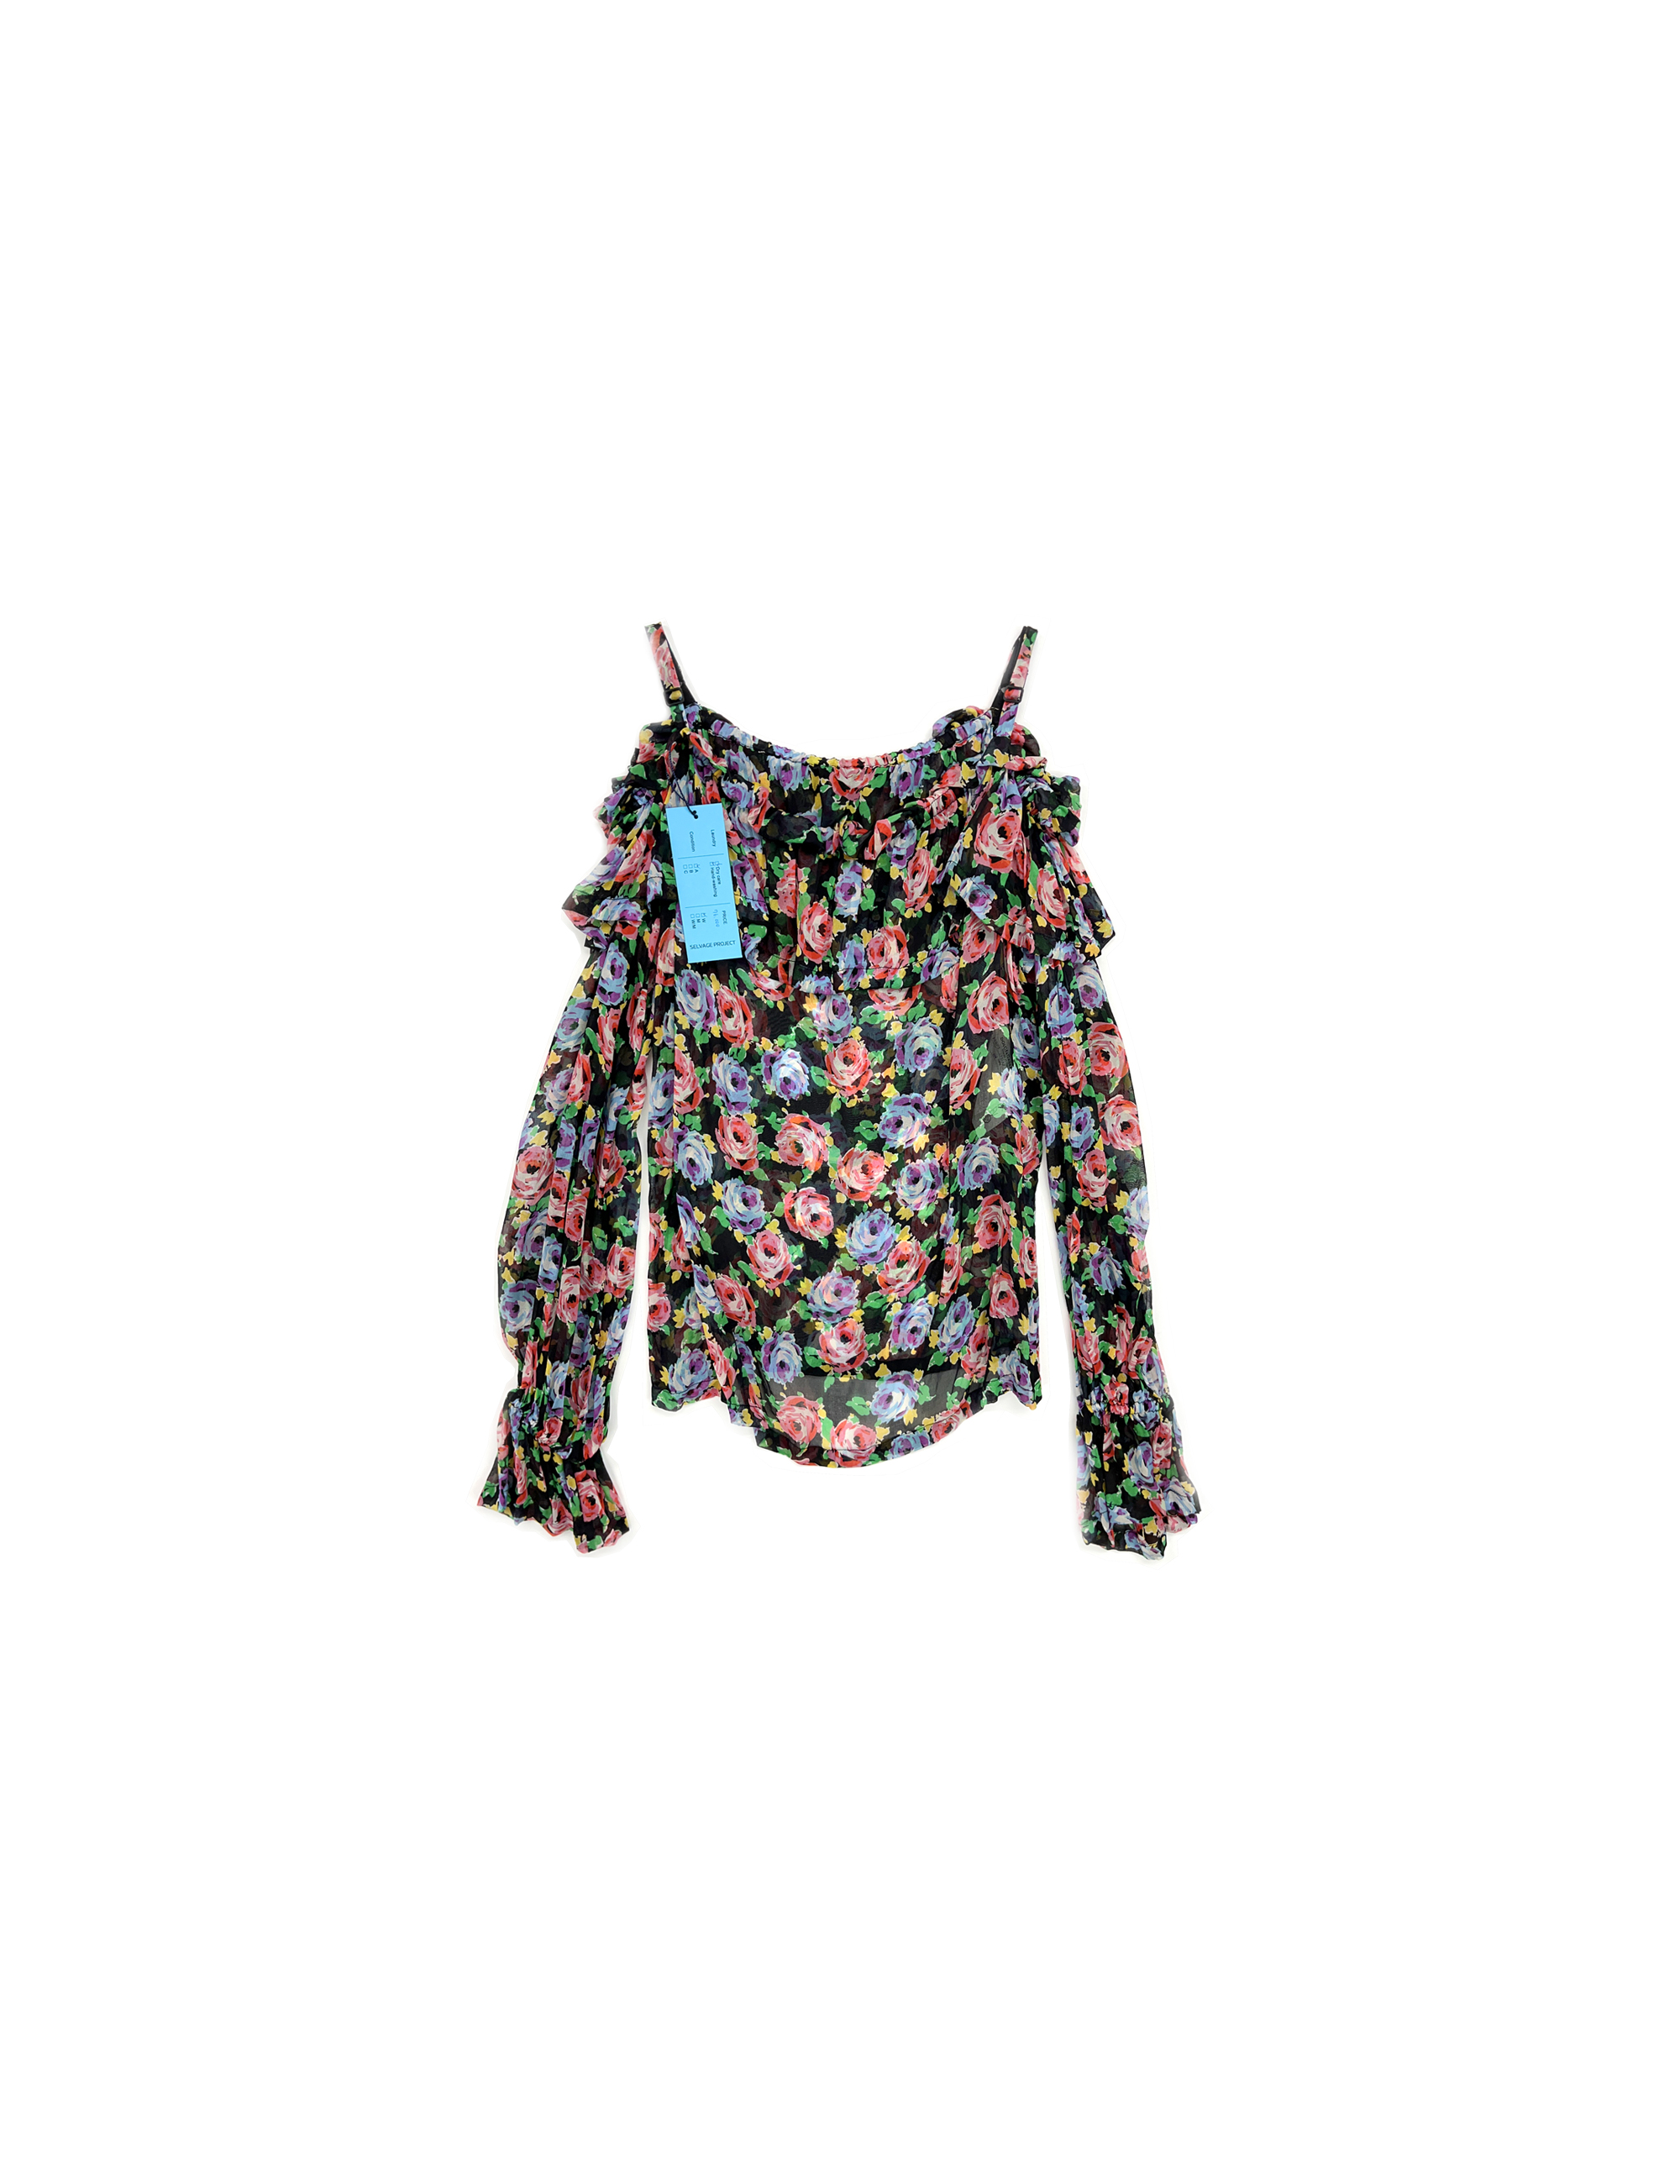 Dolce & Gabbana floral blouse